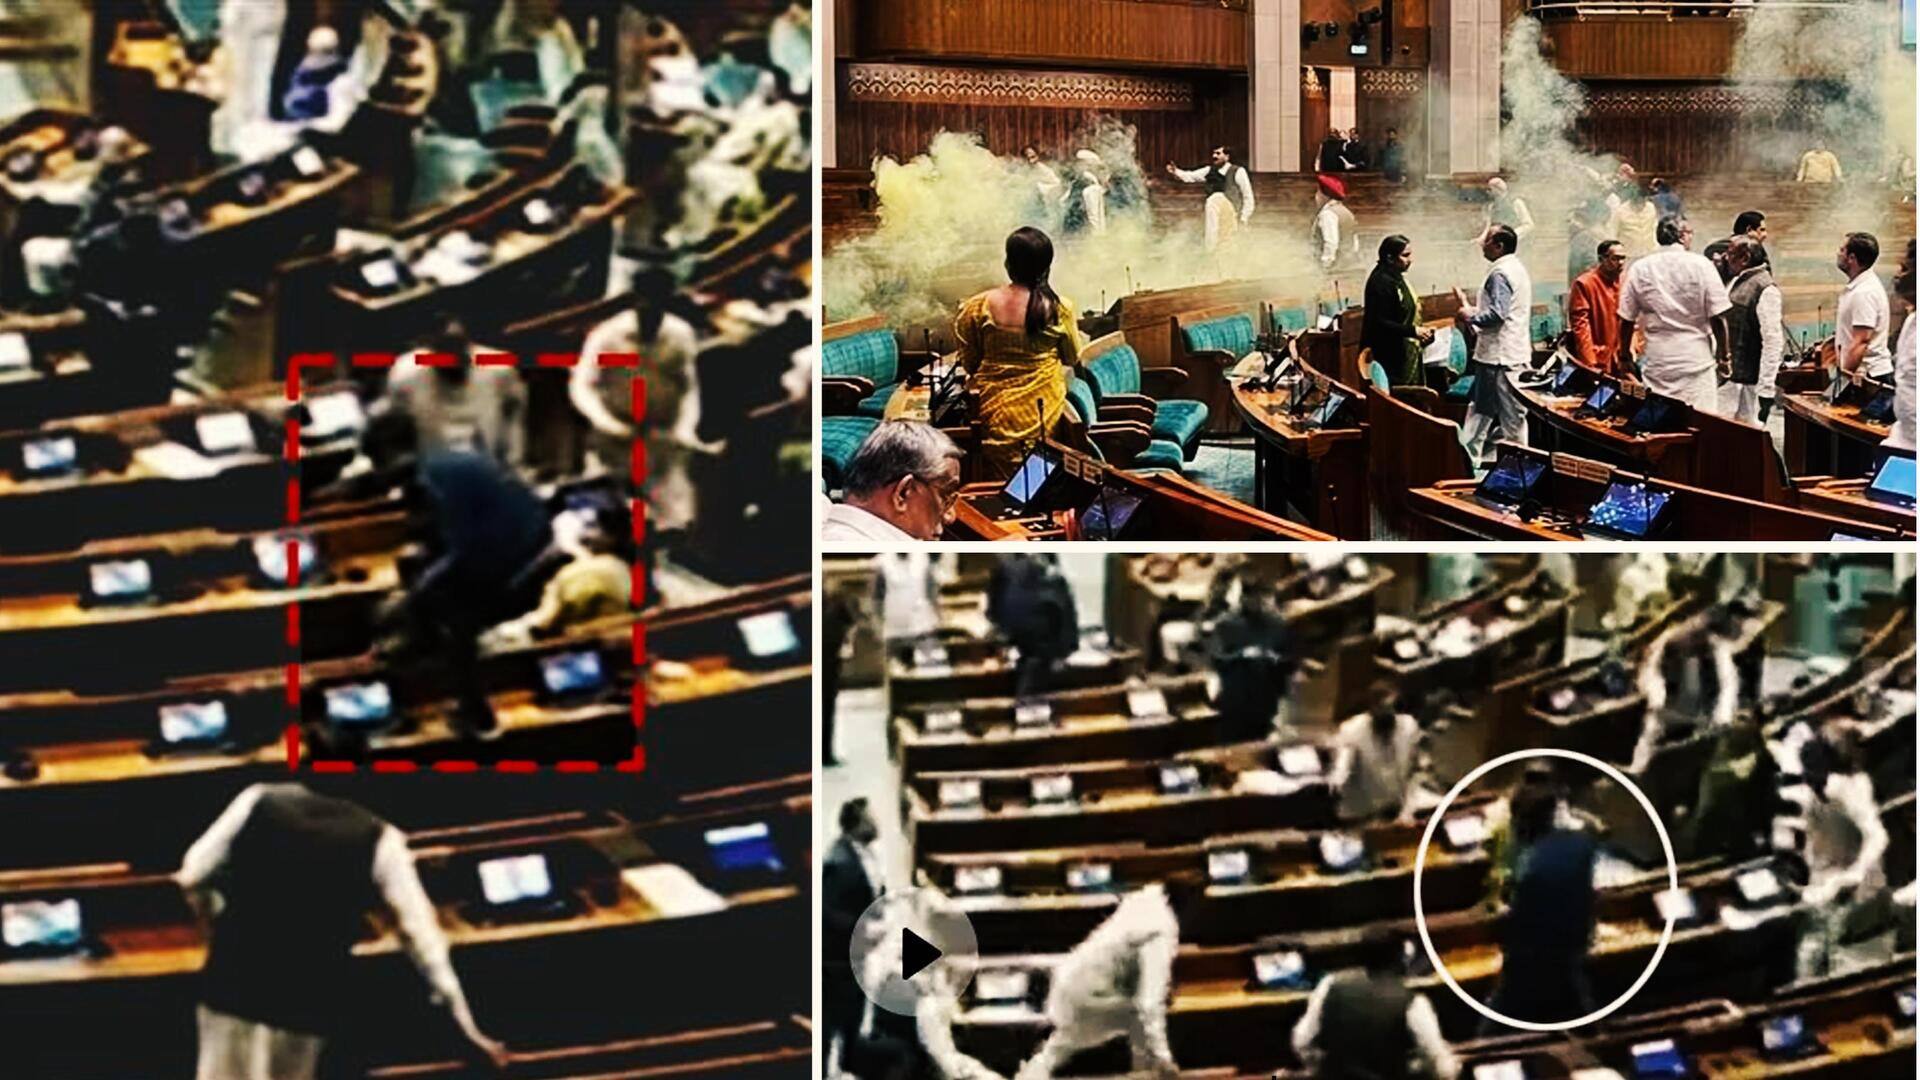 Parliment Attack: పార్లమెంట్‌లో భద్రతా వైఫల్యం..లోక్ సభలో కి దూకిన ఇద్దరు